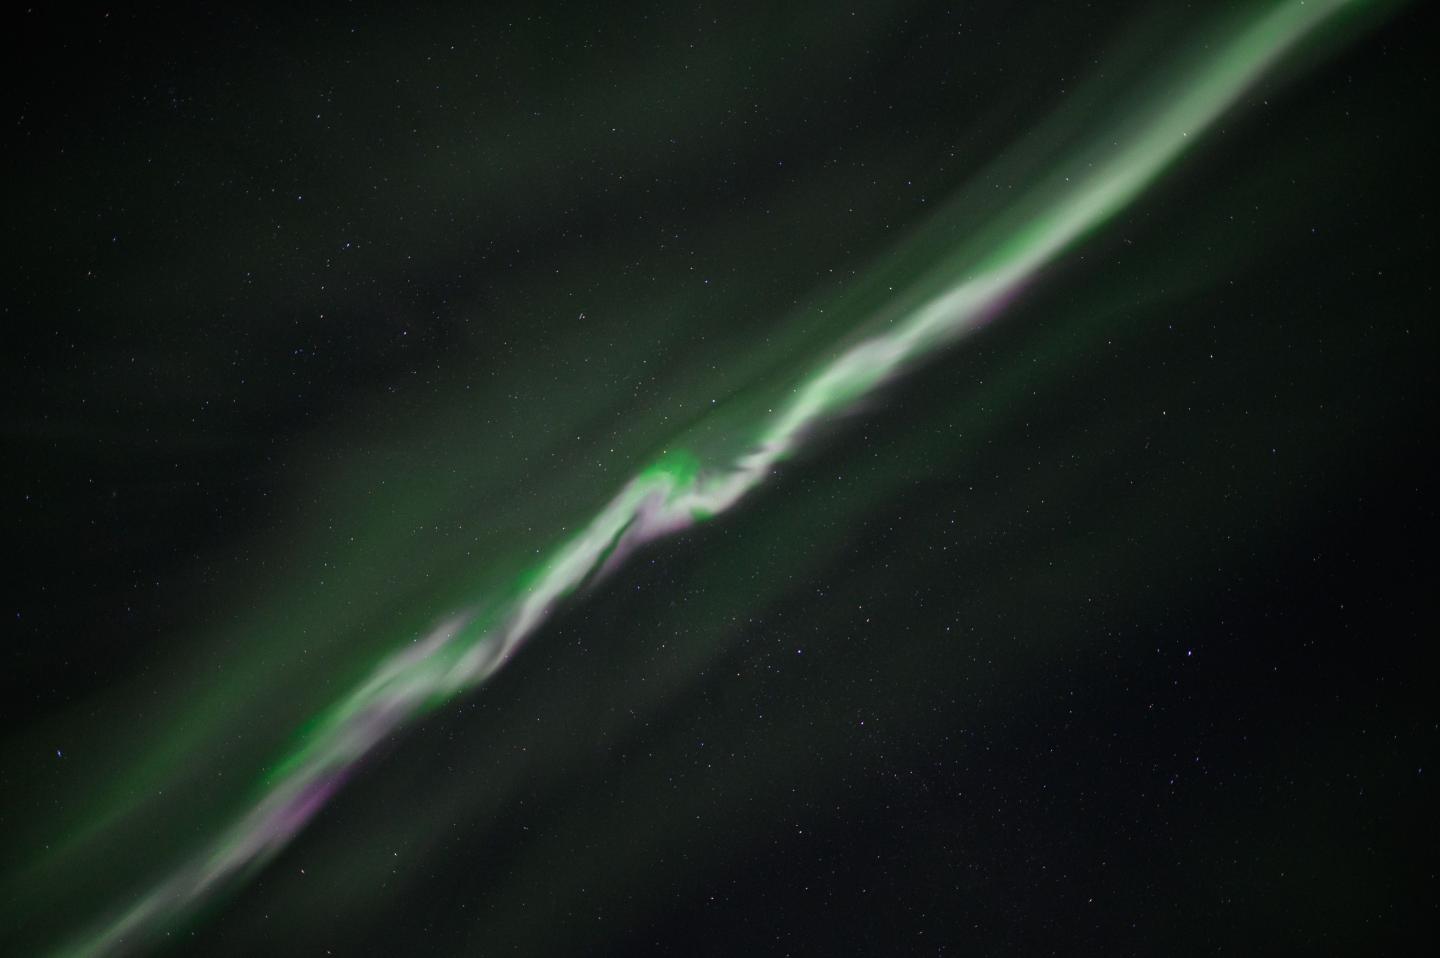 A thin blurred line of green and purple aurorae cuts diagonally across a dark sky